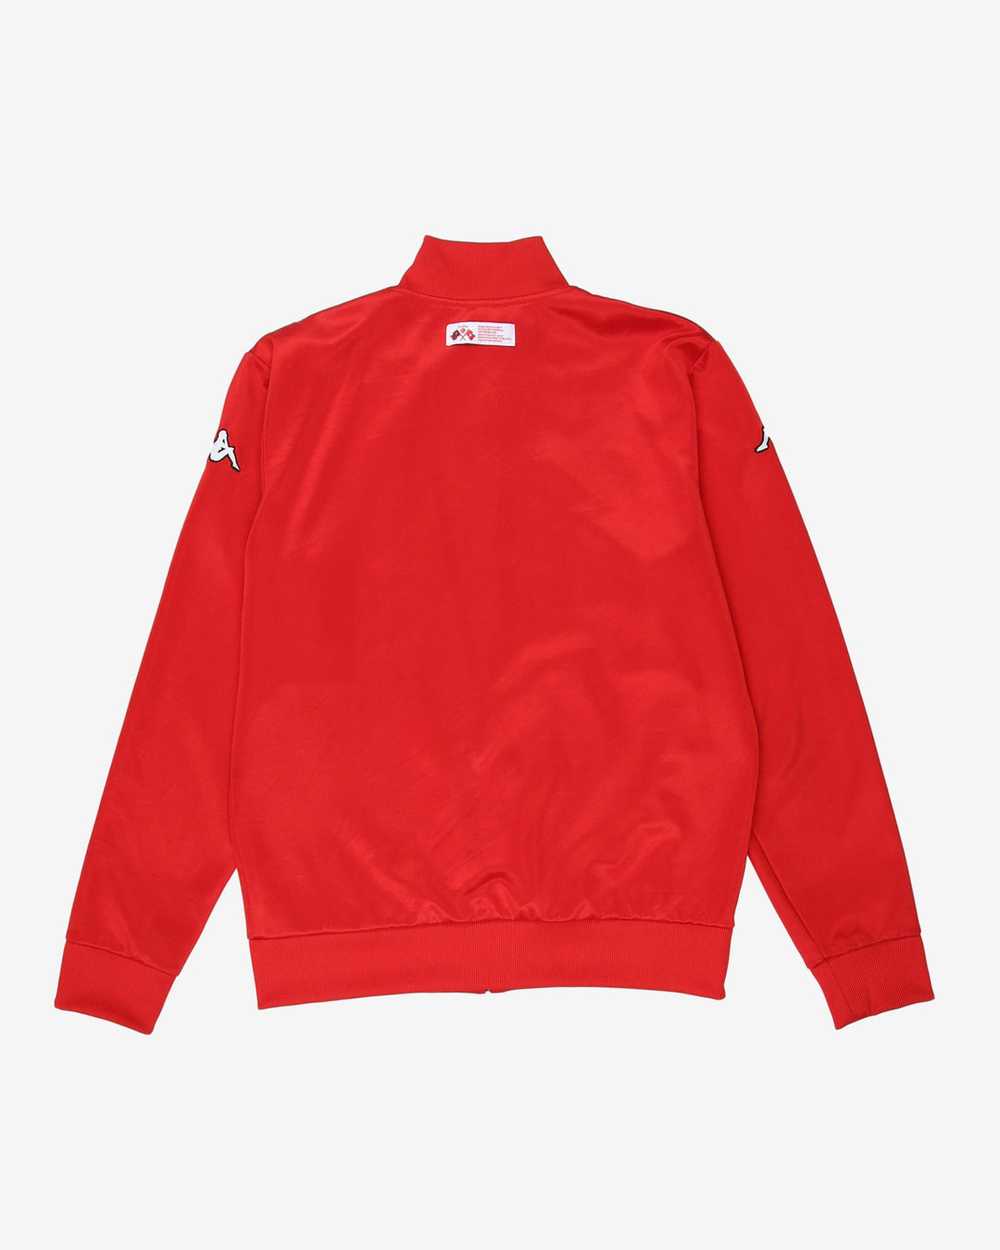 Kappa suisse red logo zip up track sweatshirt - l - image 4